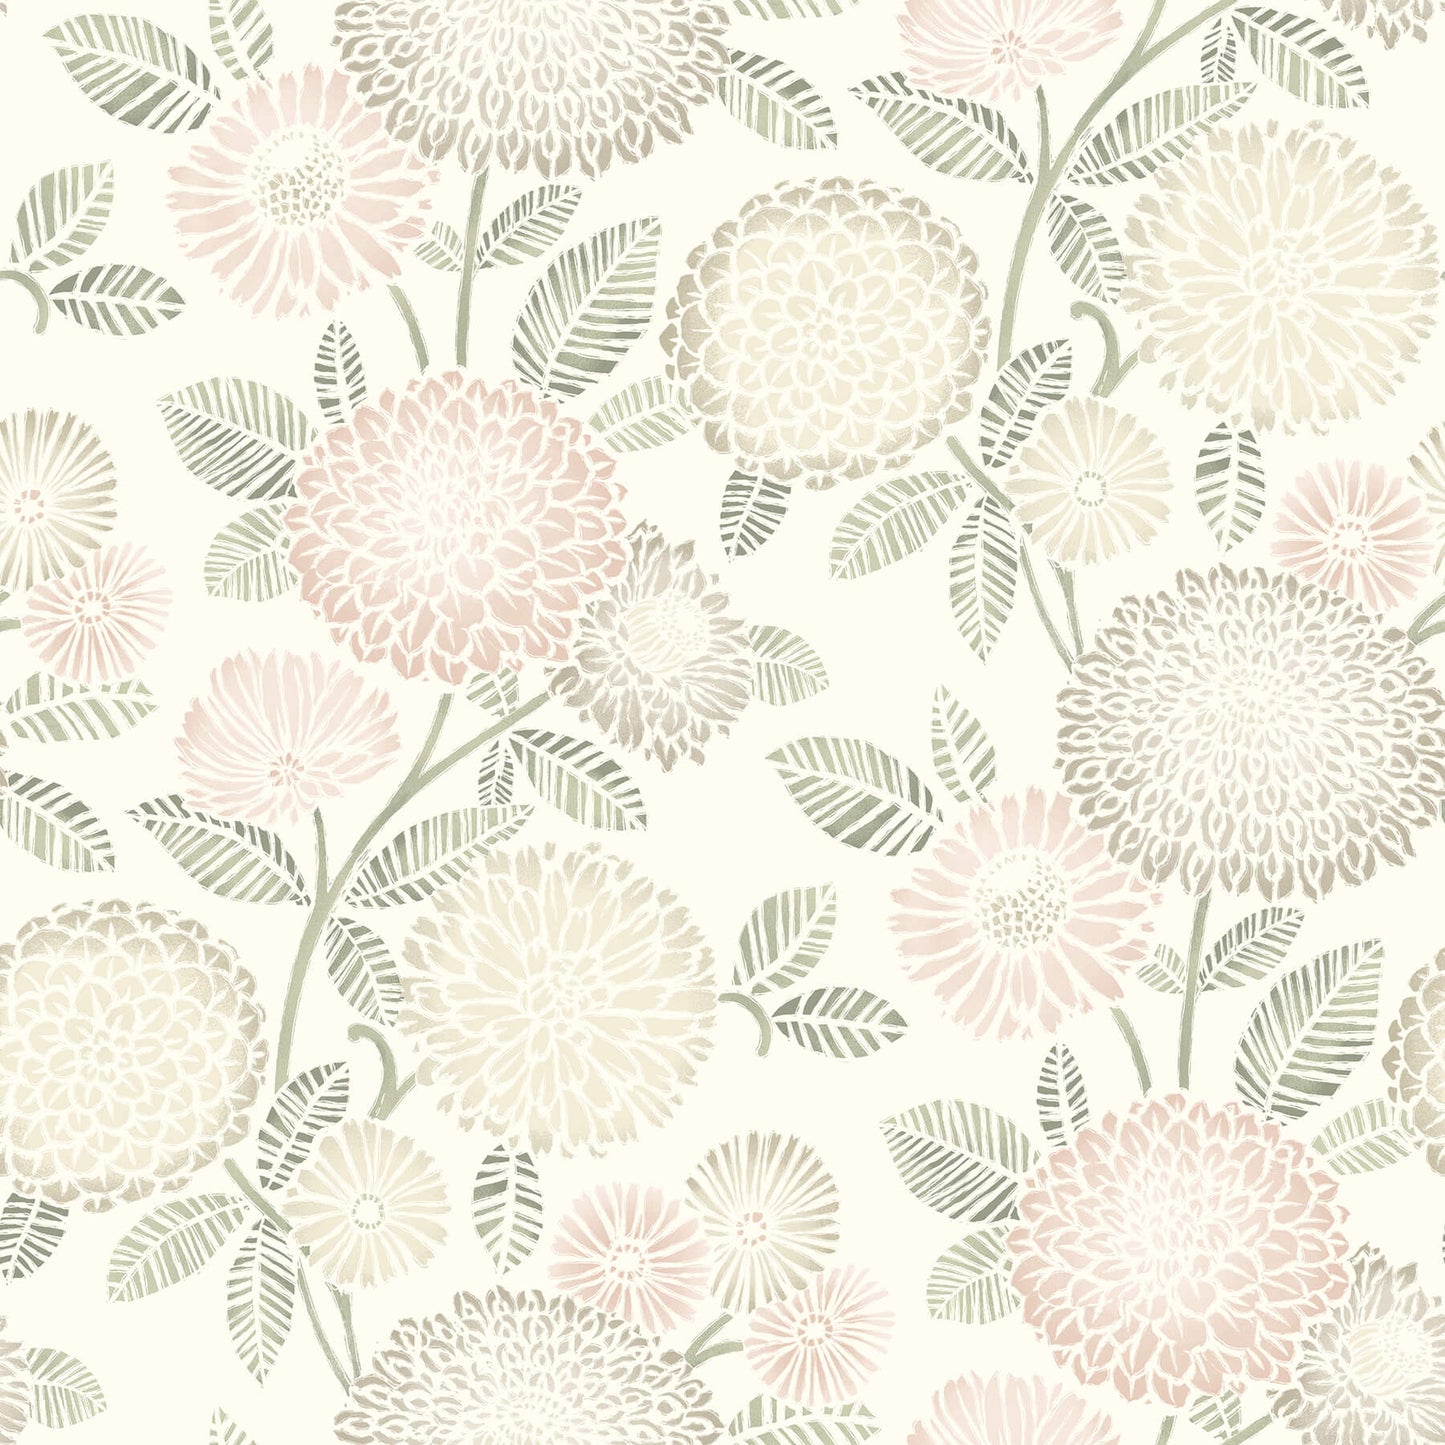 Chesapeake Kinfolk Zalipie Floral Trail Wallpaper - Blush